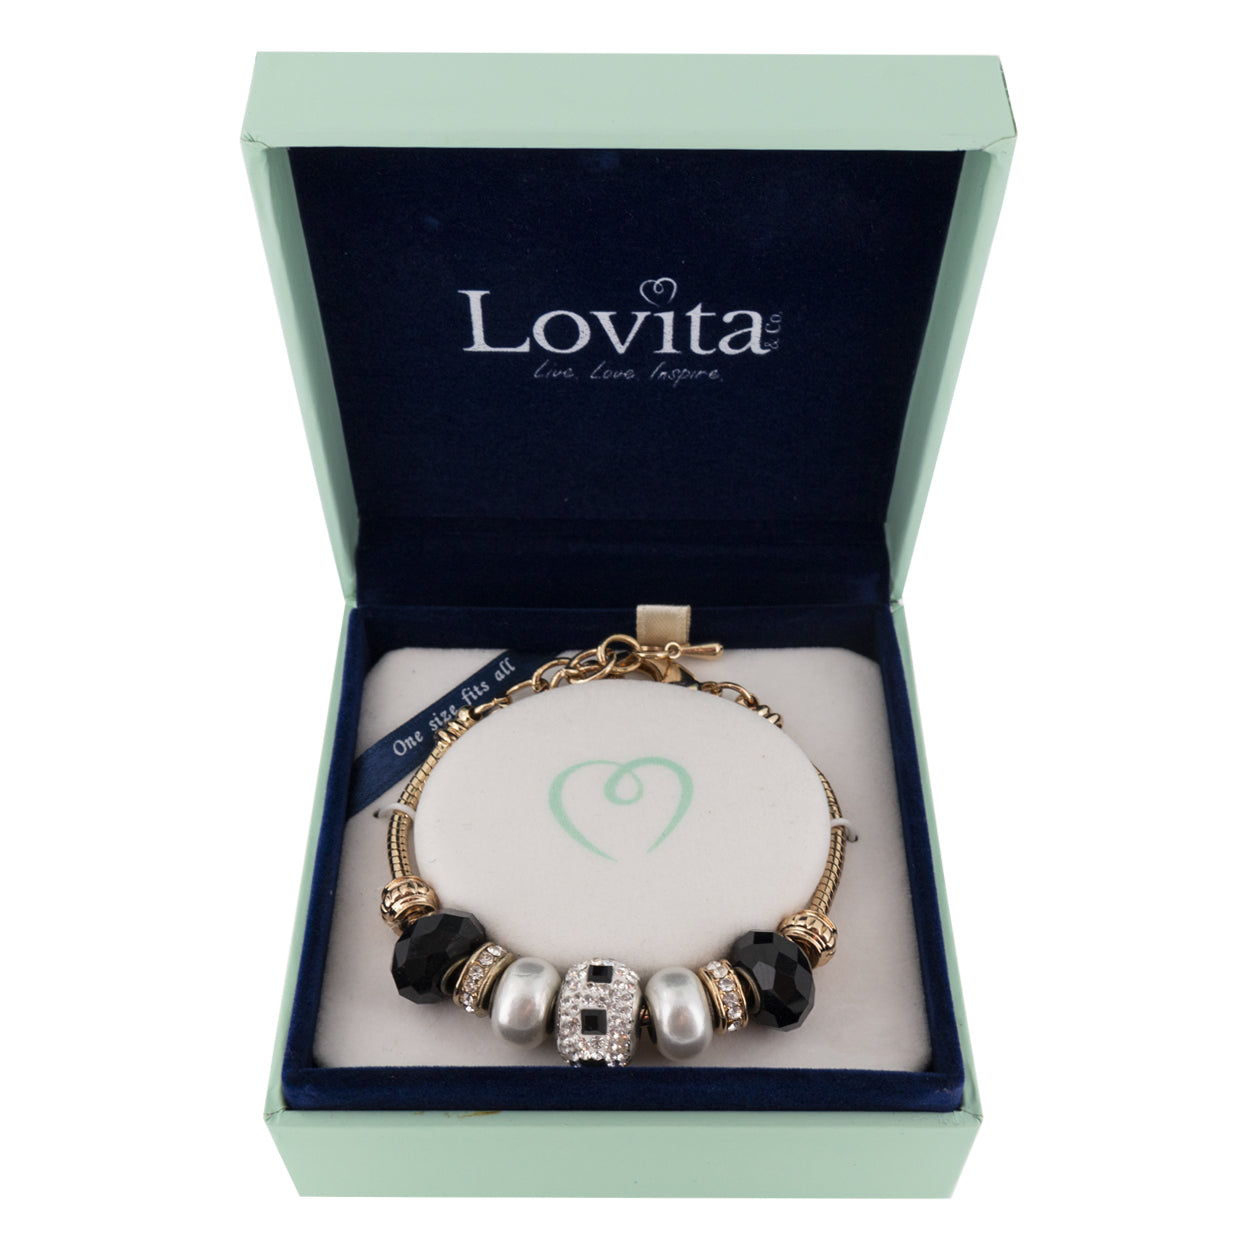 Lovita Charm Bracelet Gold Band Silver And Black Charms